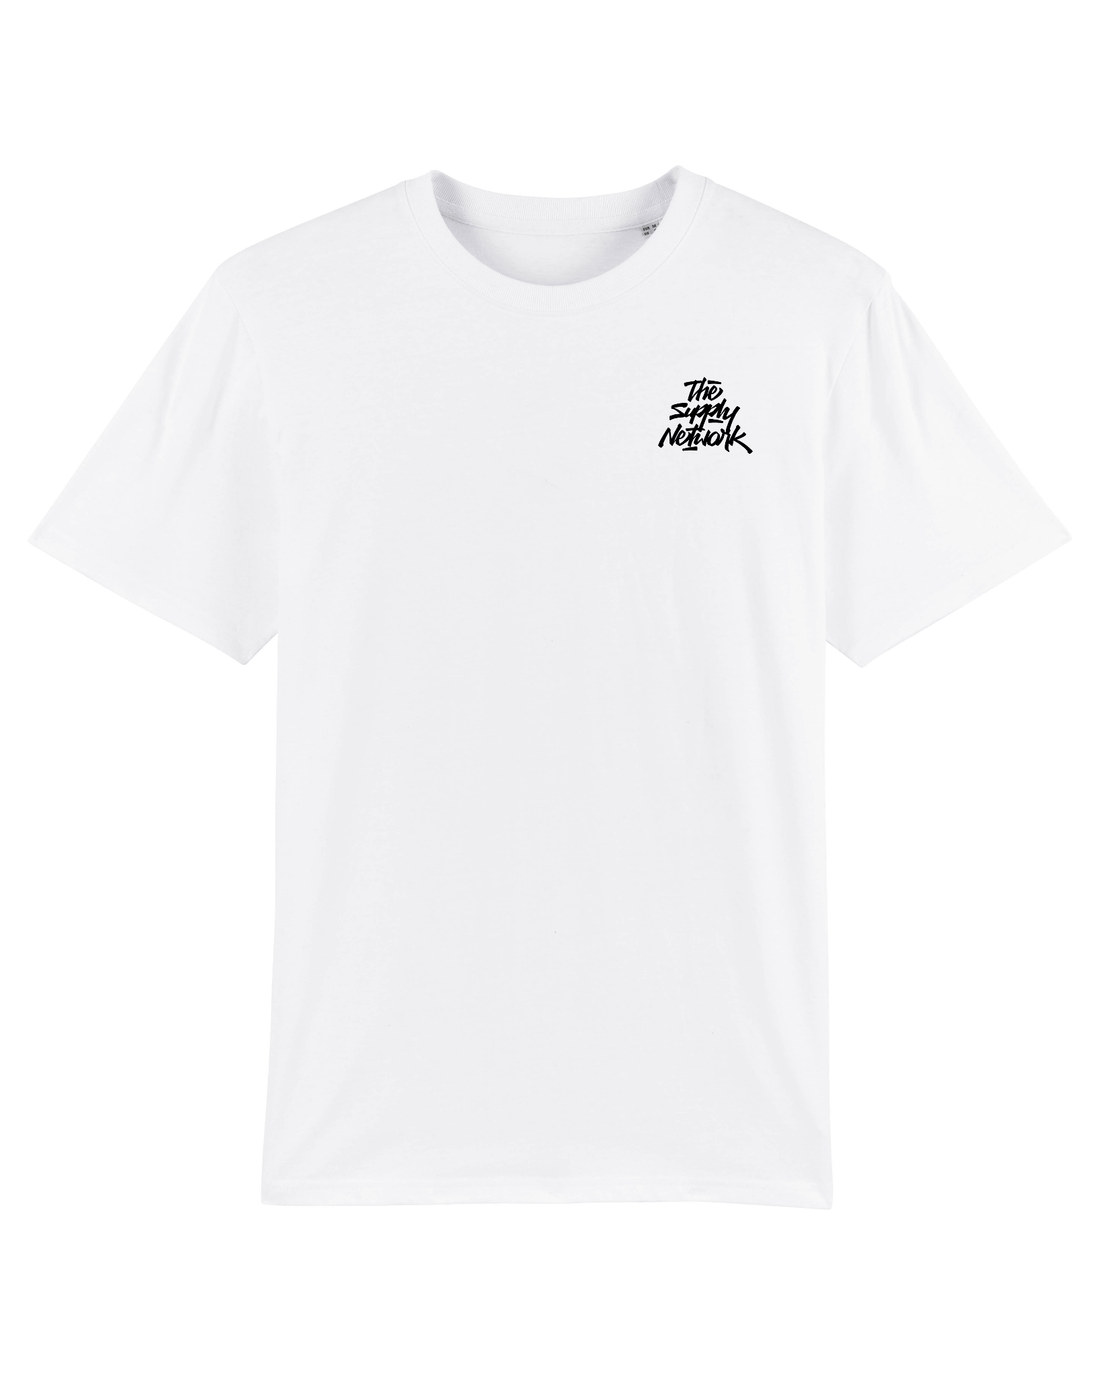 White Skater T-Shirt, The Supply Network Front Print